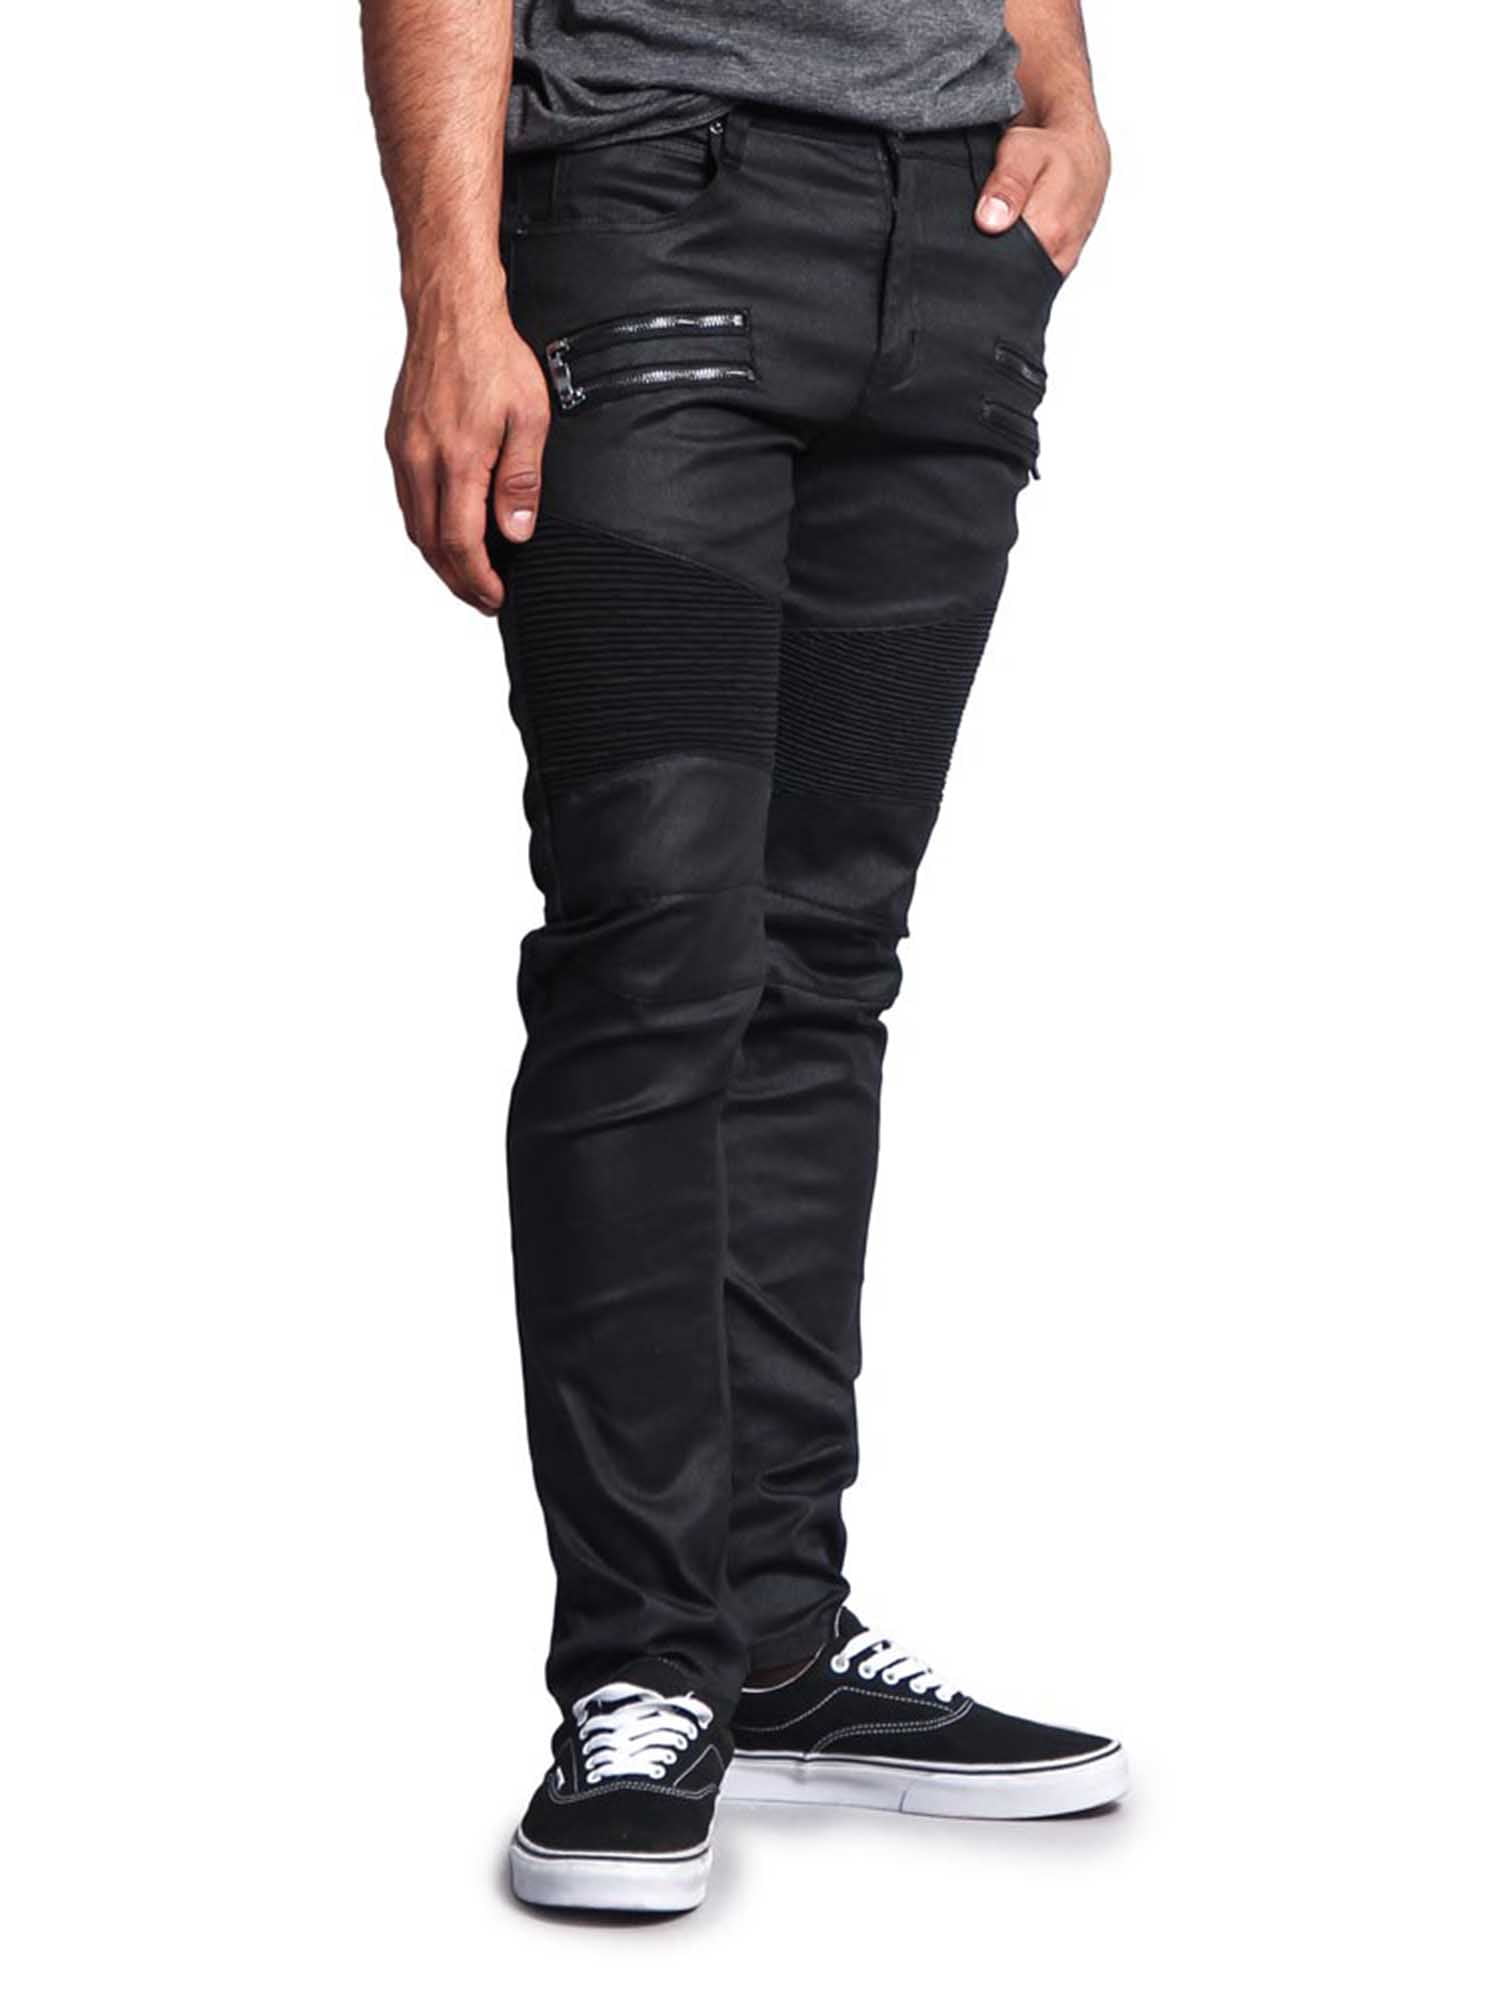 Victorious Men's Coated Slim Fit Moto Pants Jeans - Olive 28/30 -